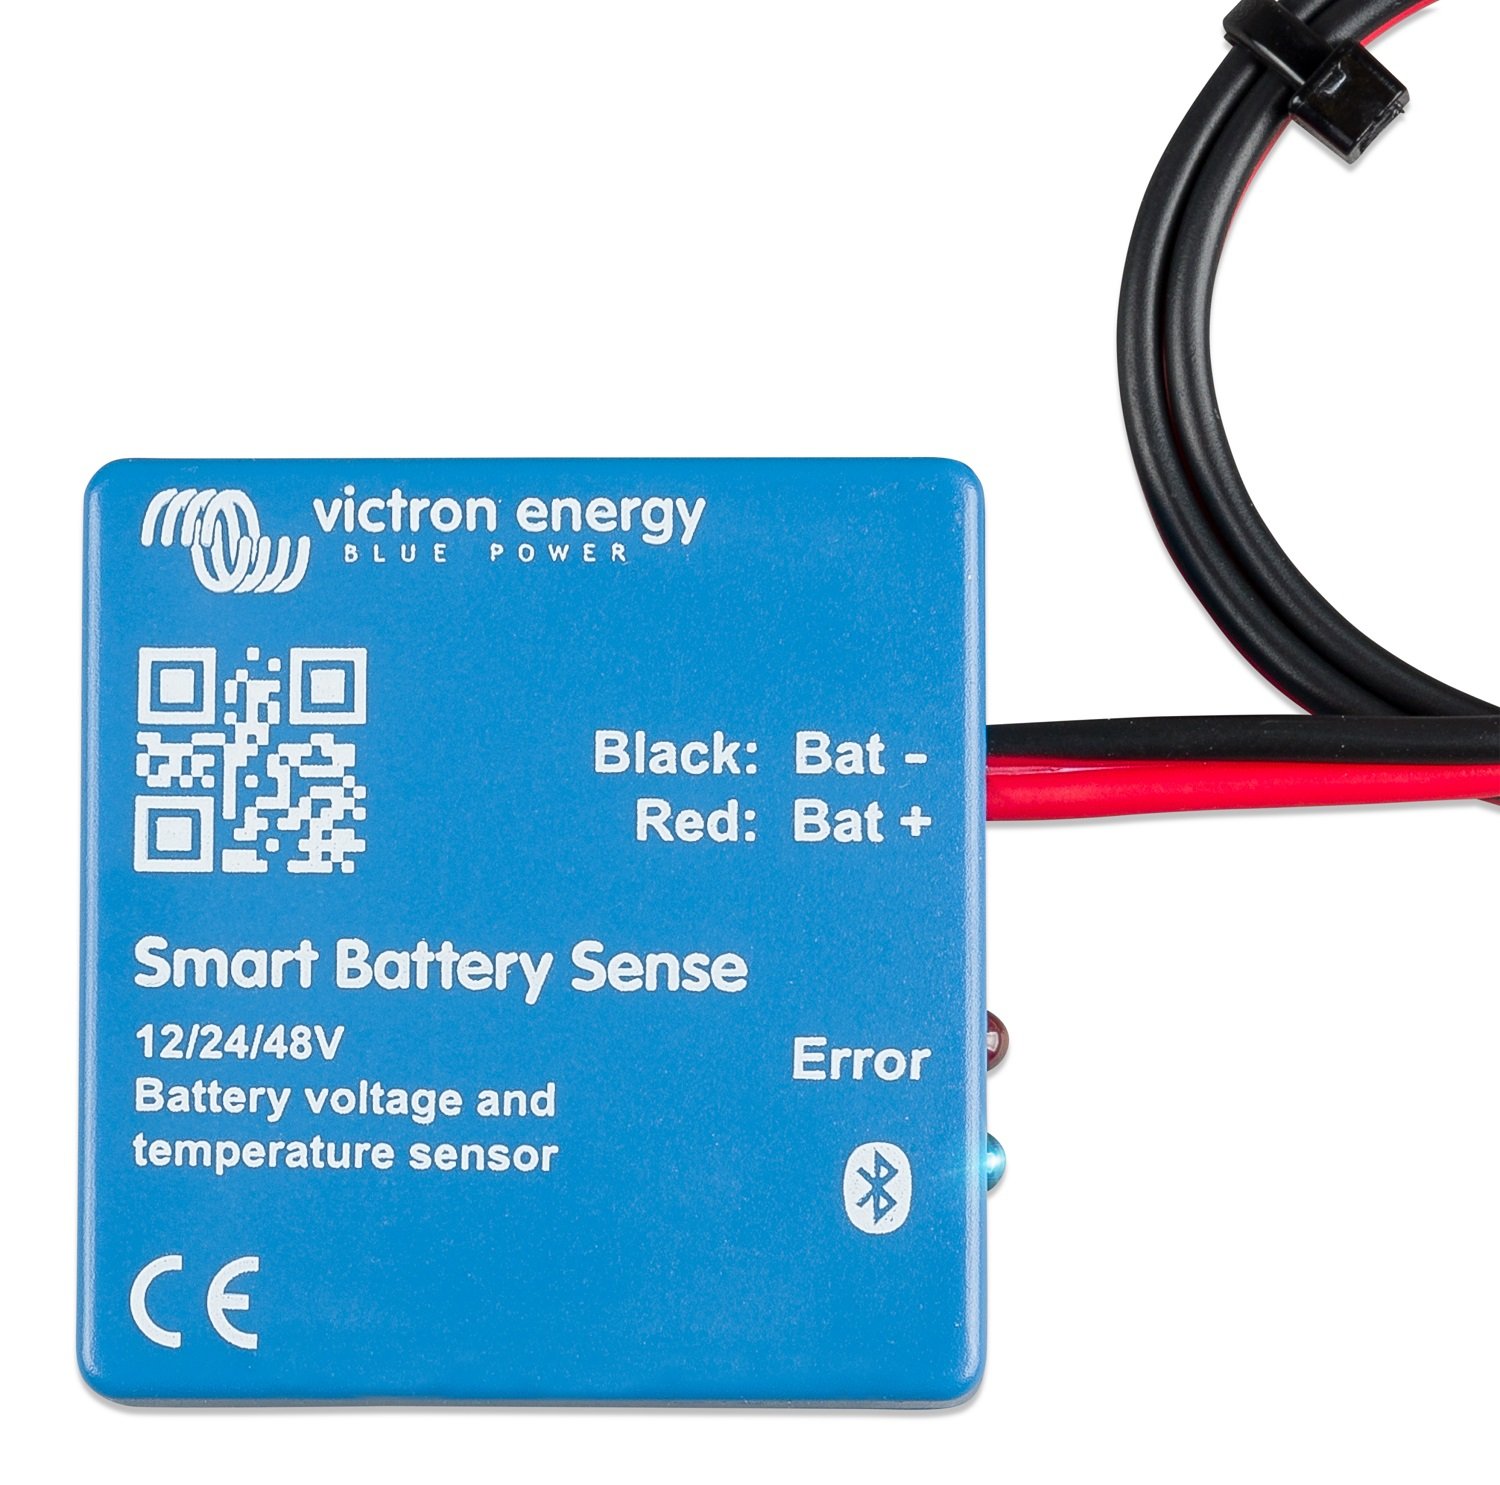 What's Victron Smart Battery Sense's highest detectable temperature?